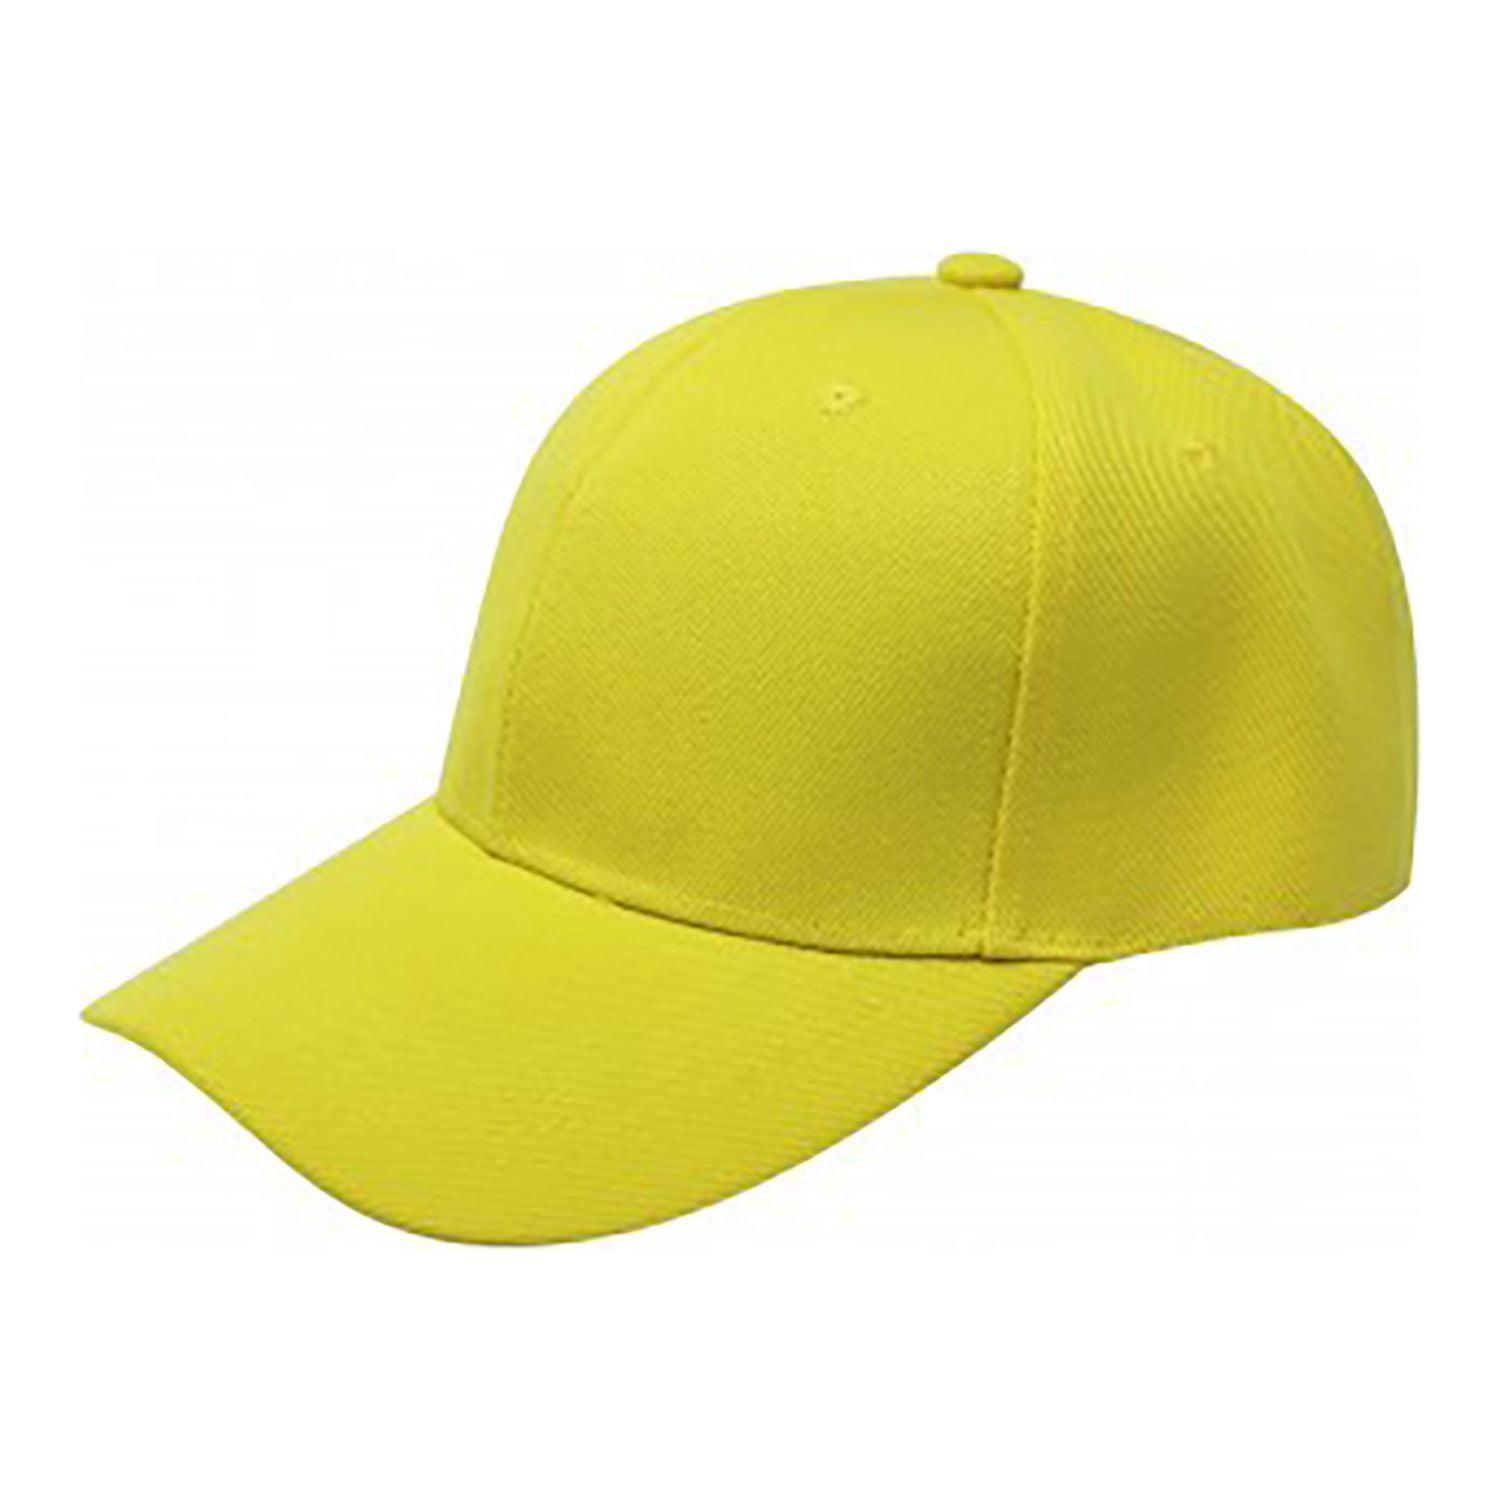 10pcs Adjustable Baseball Cap Plain Blank Solid Yellow Color